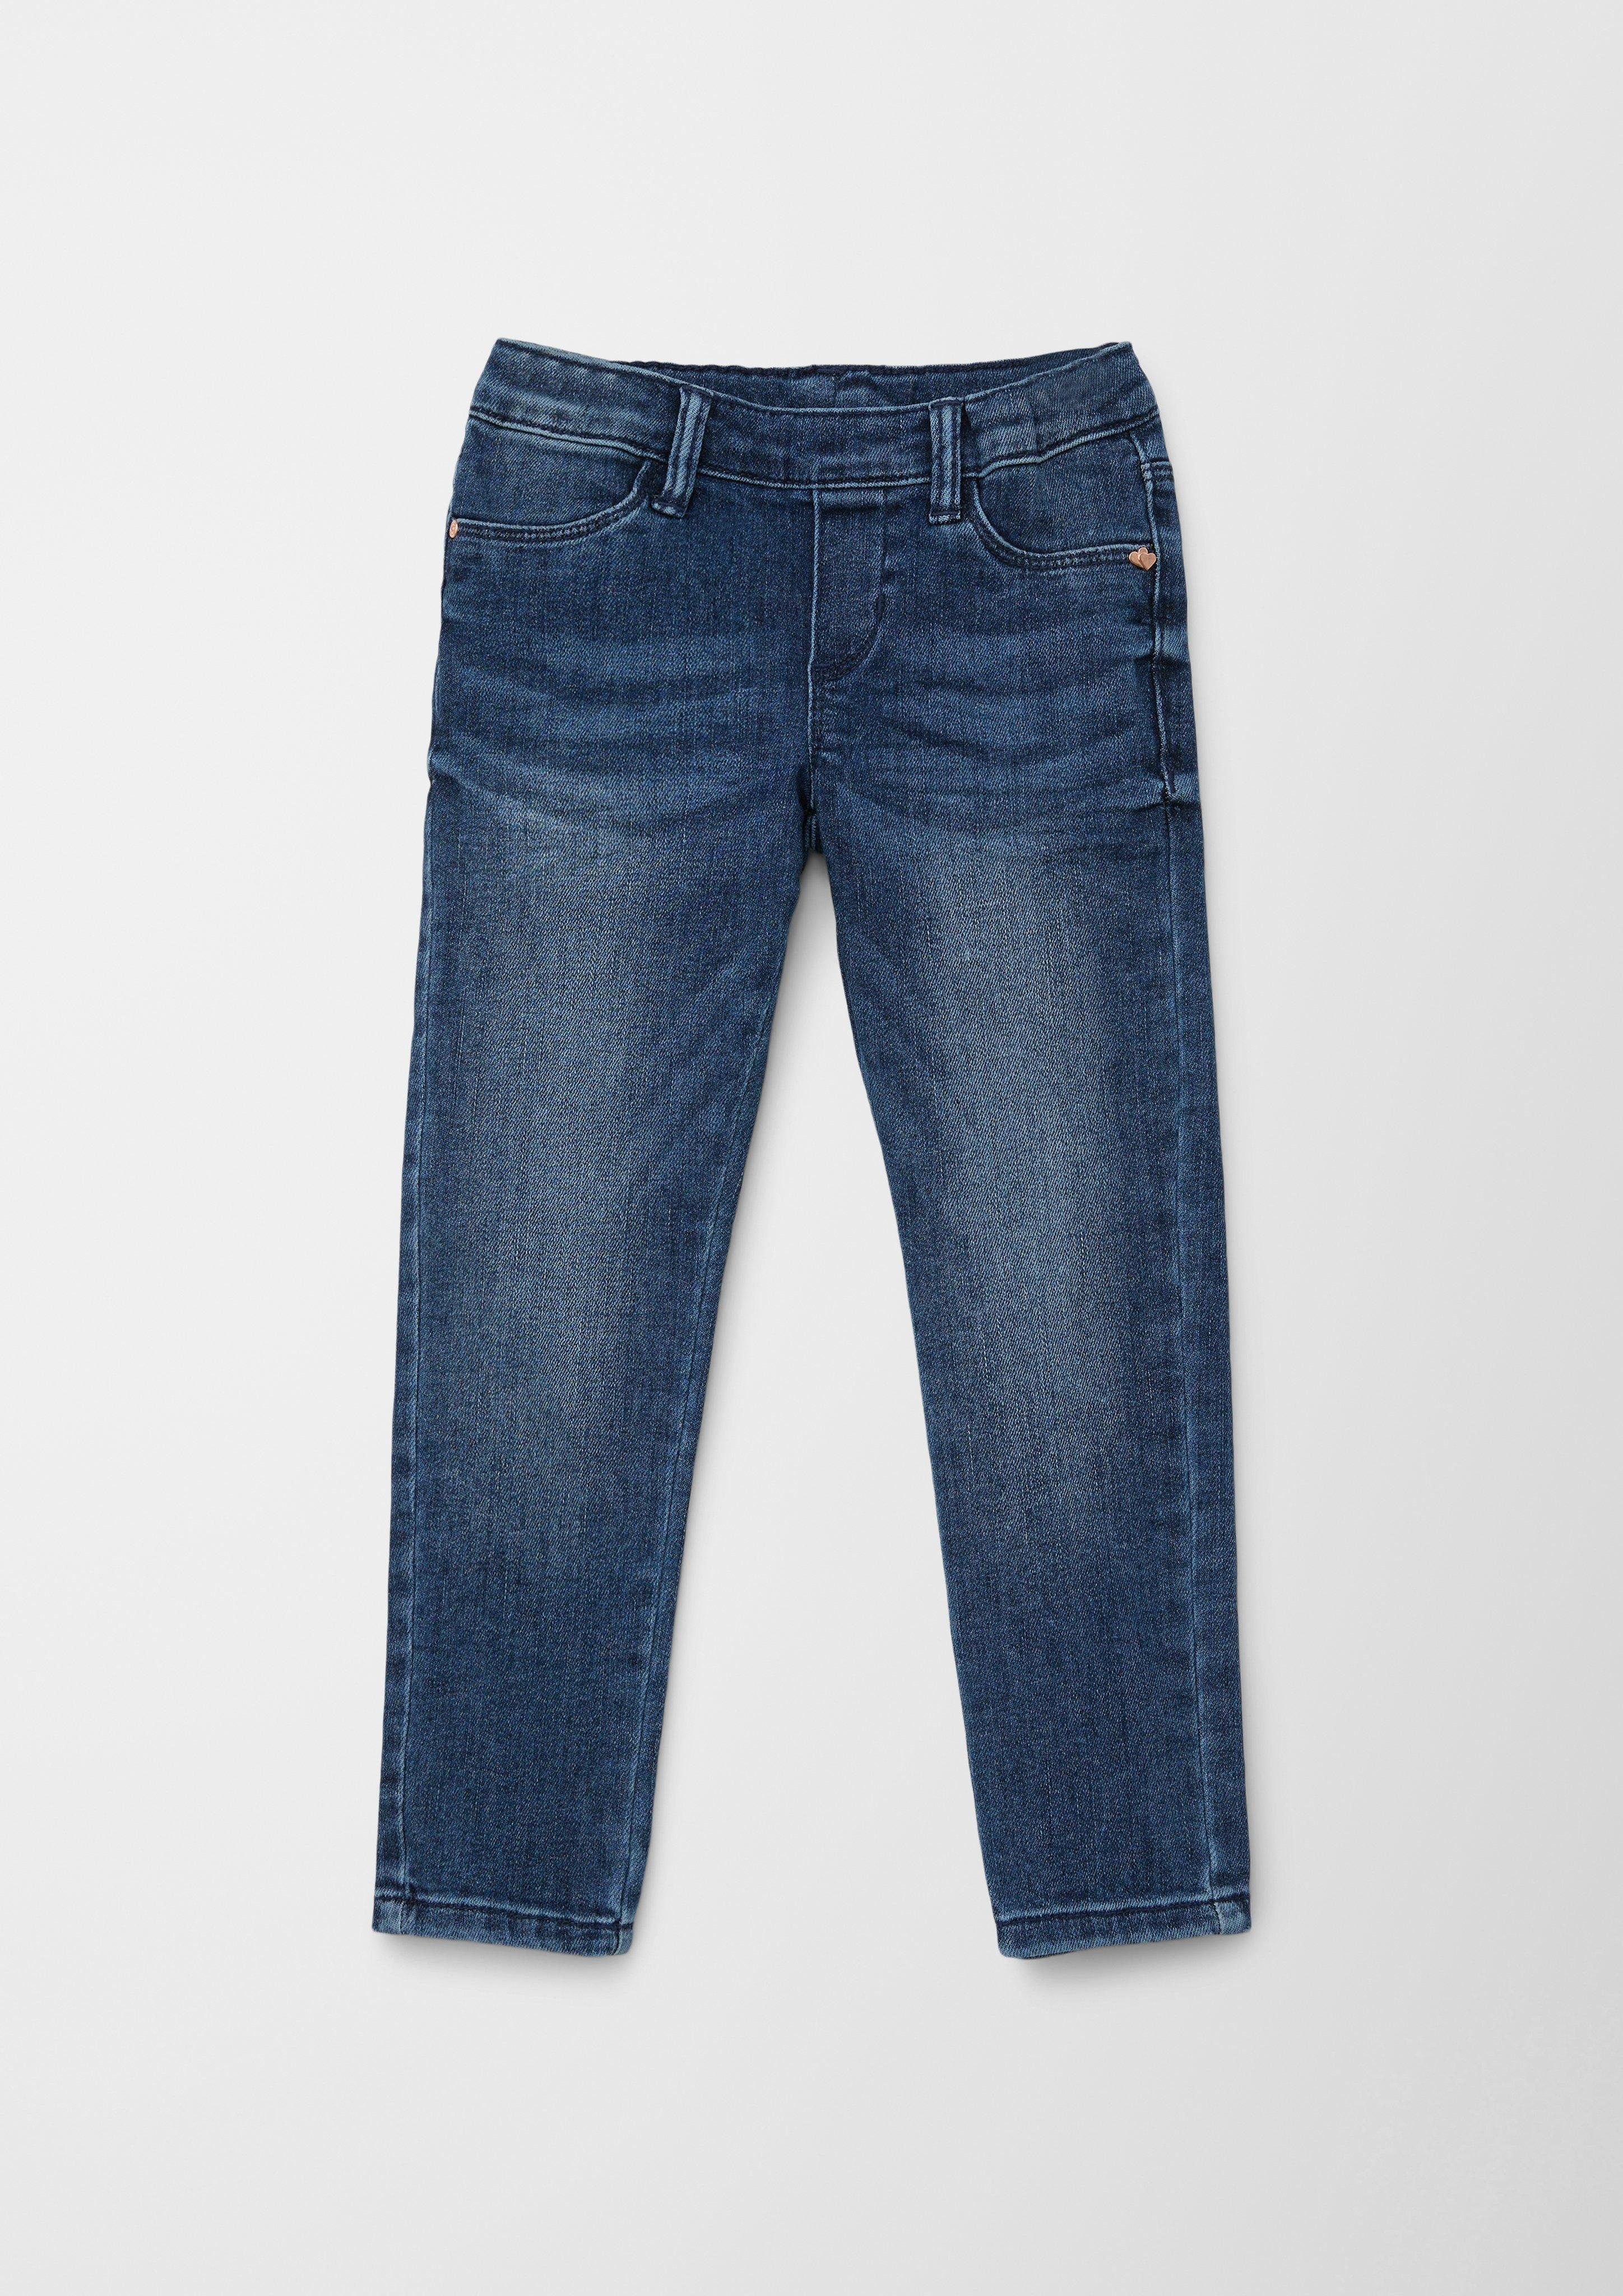 s.Oliver Stoffhose Jeans Fit Waschung / / / Mid Elastikbund Slim Leg Slim Treggings / Rise